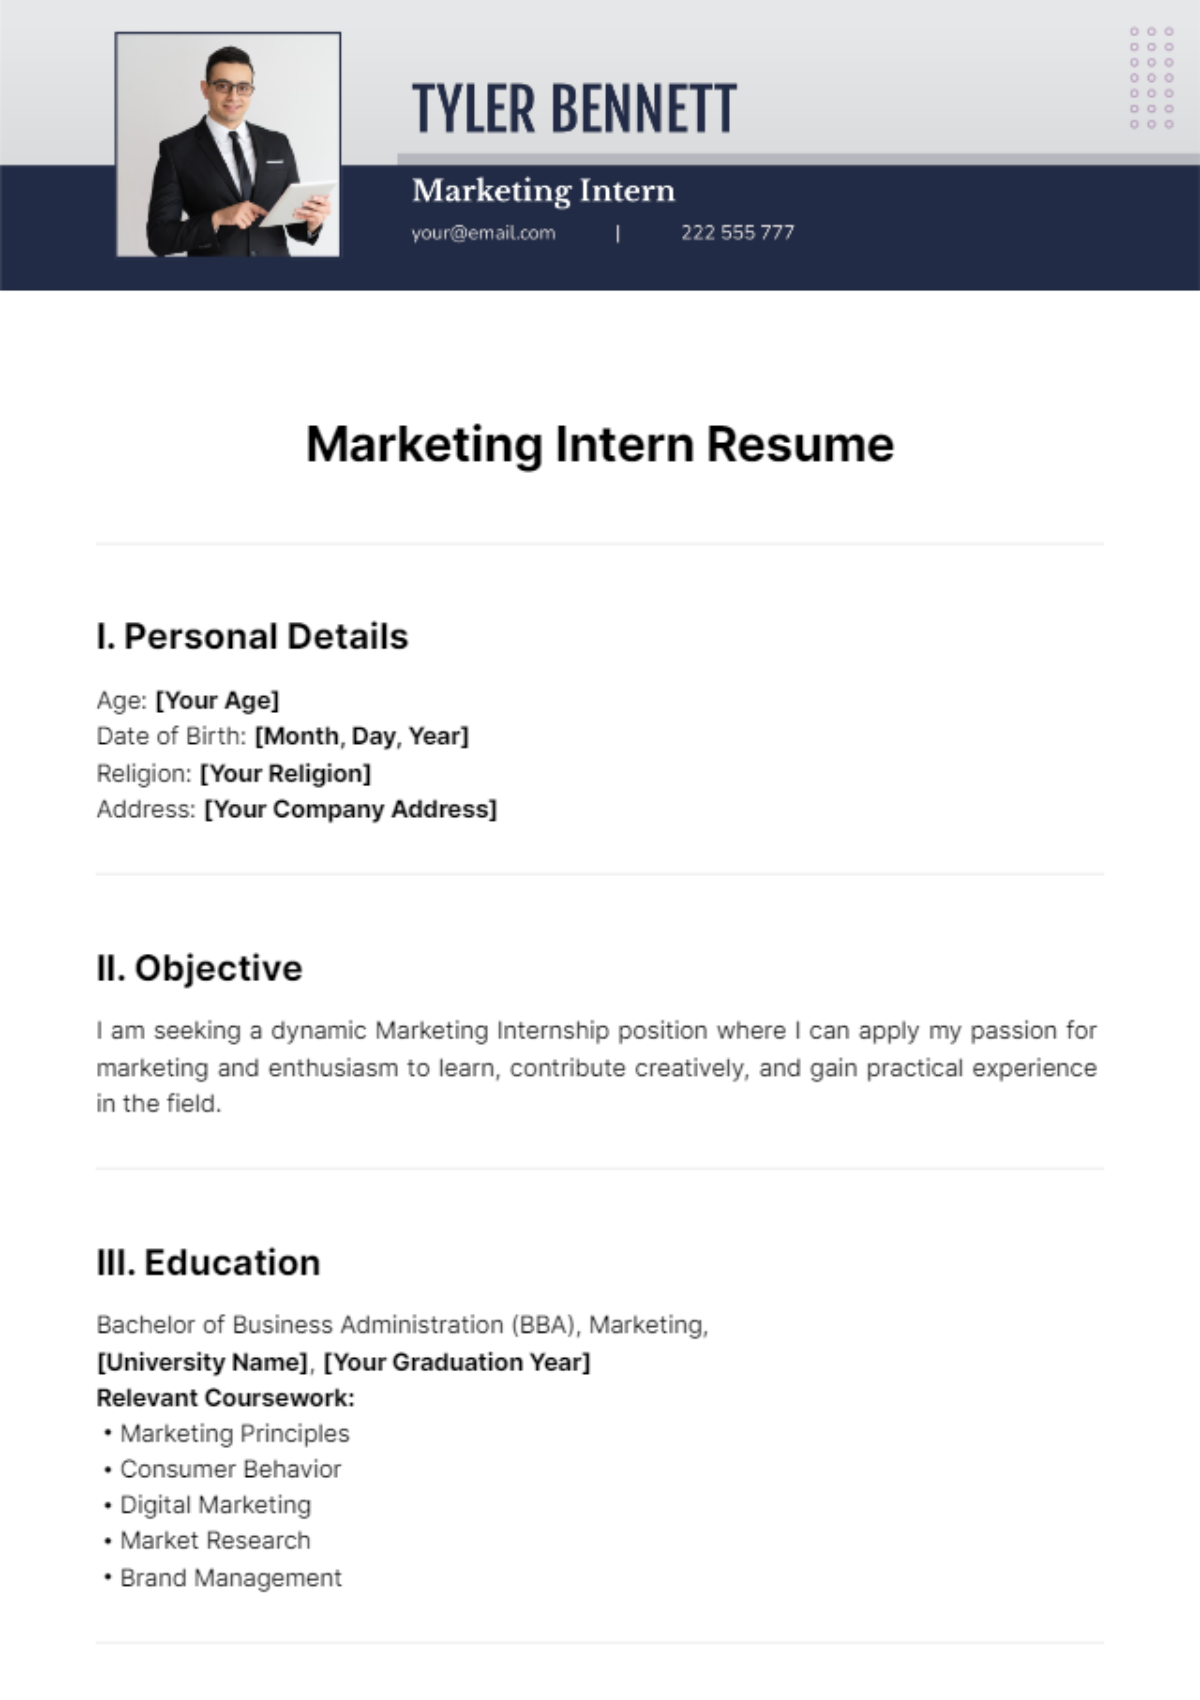 Marketing Intern Resume Template